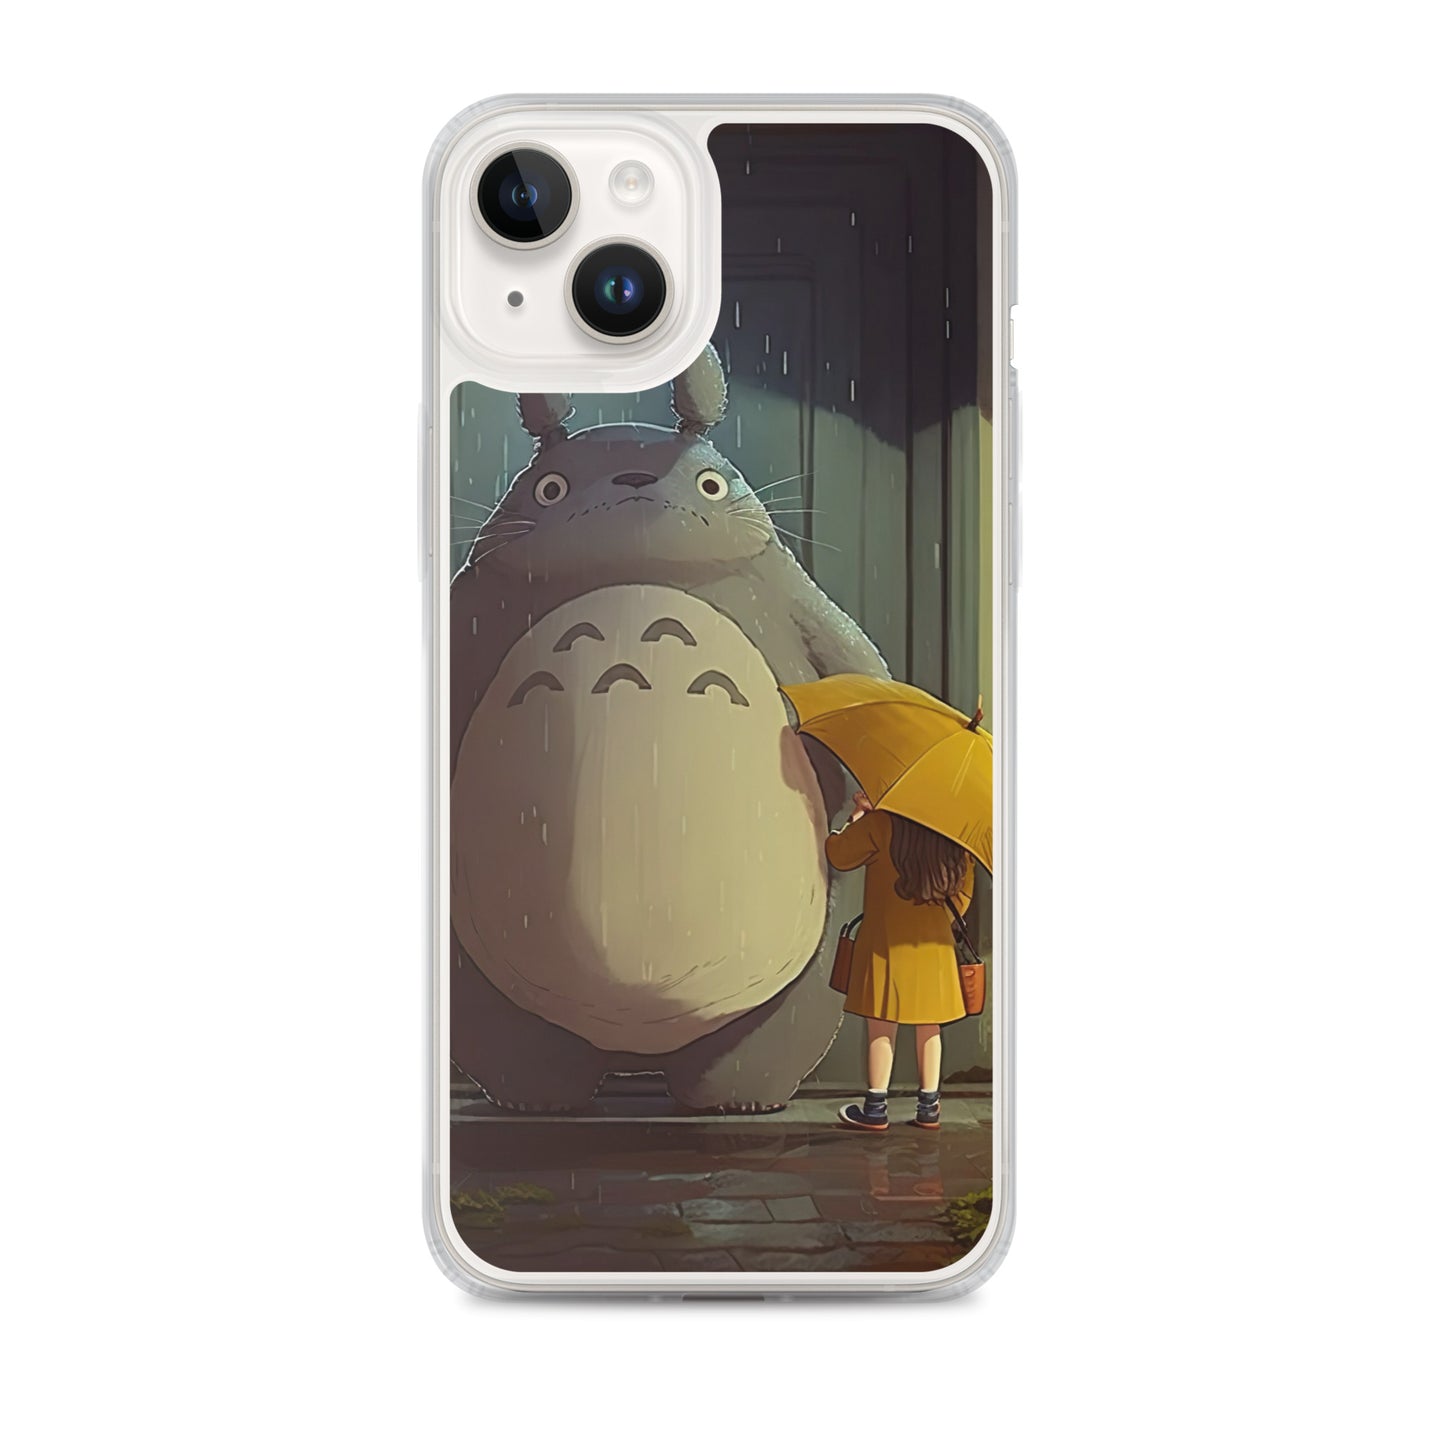 My Neighbour Totoro iPhone Case